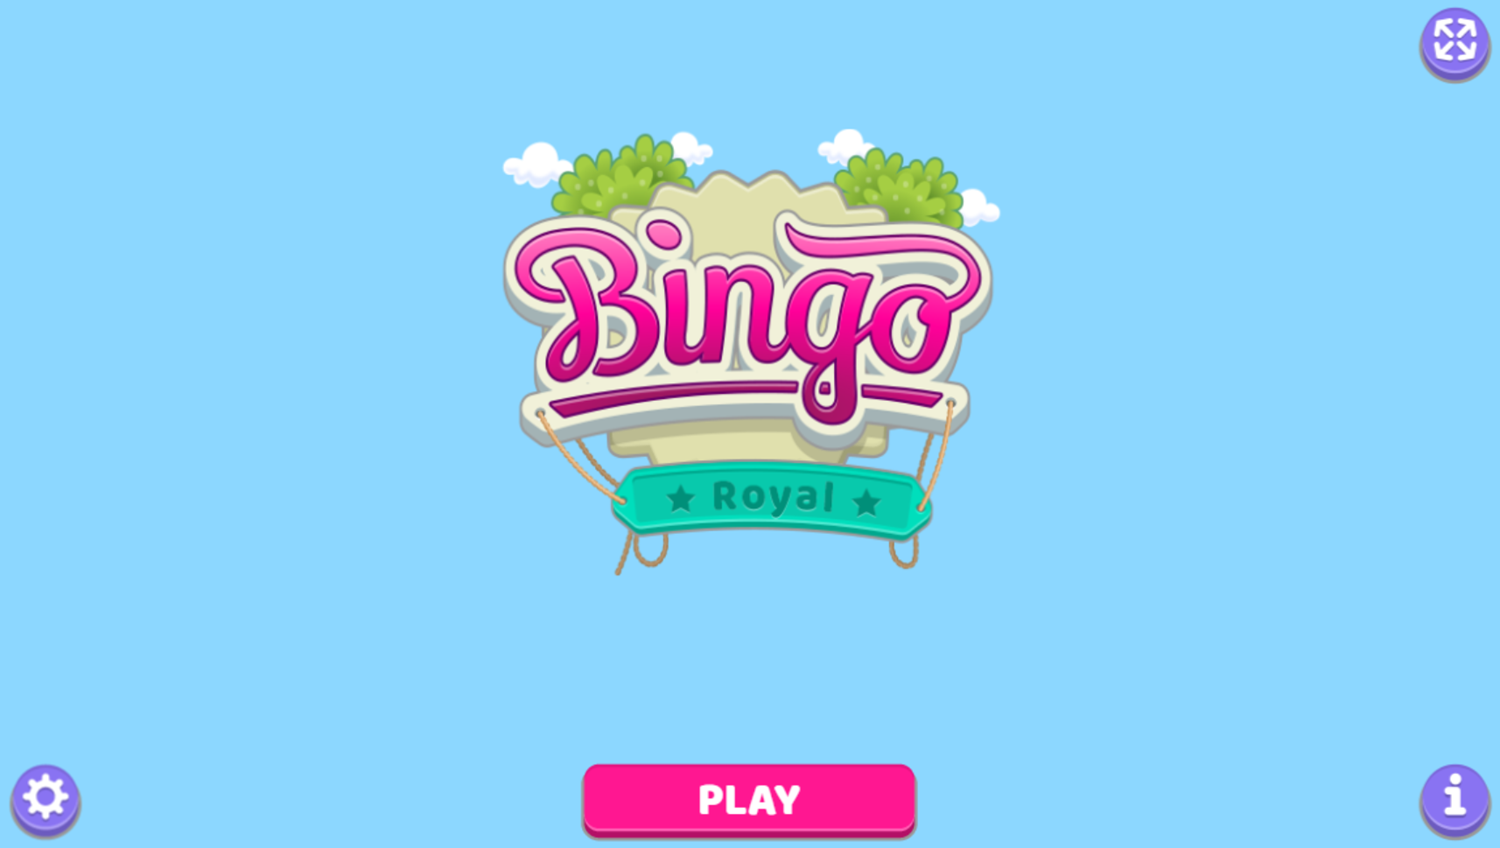 Bingo Royal Game Welcome Screen Screenshot.